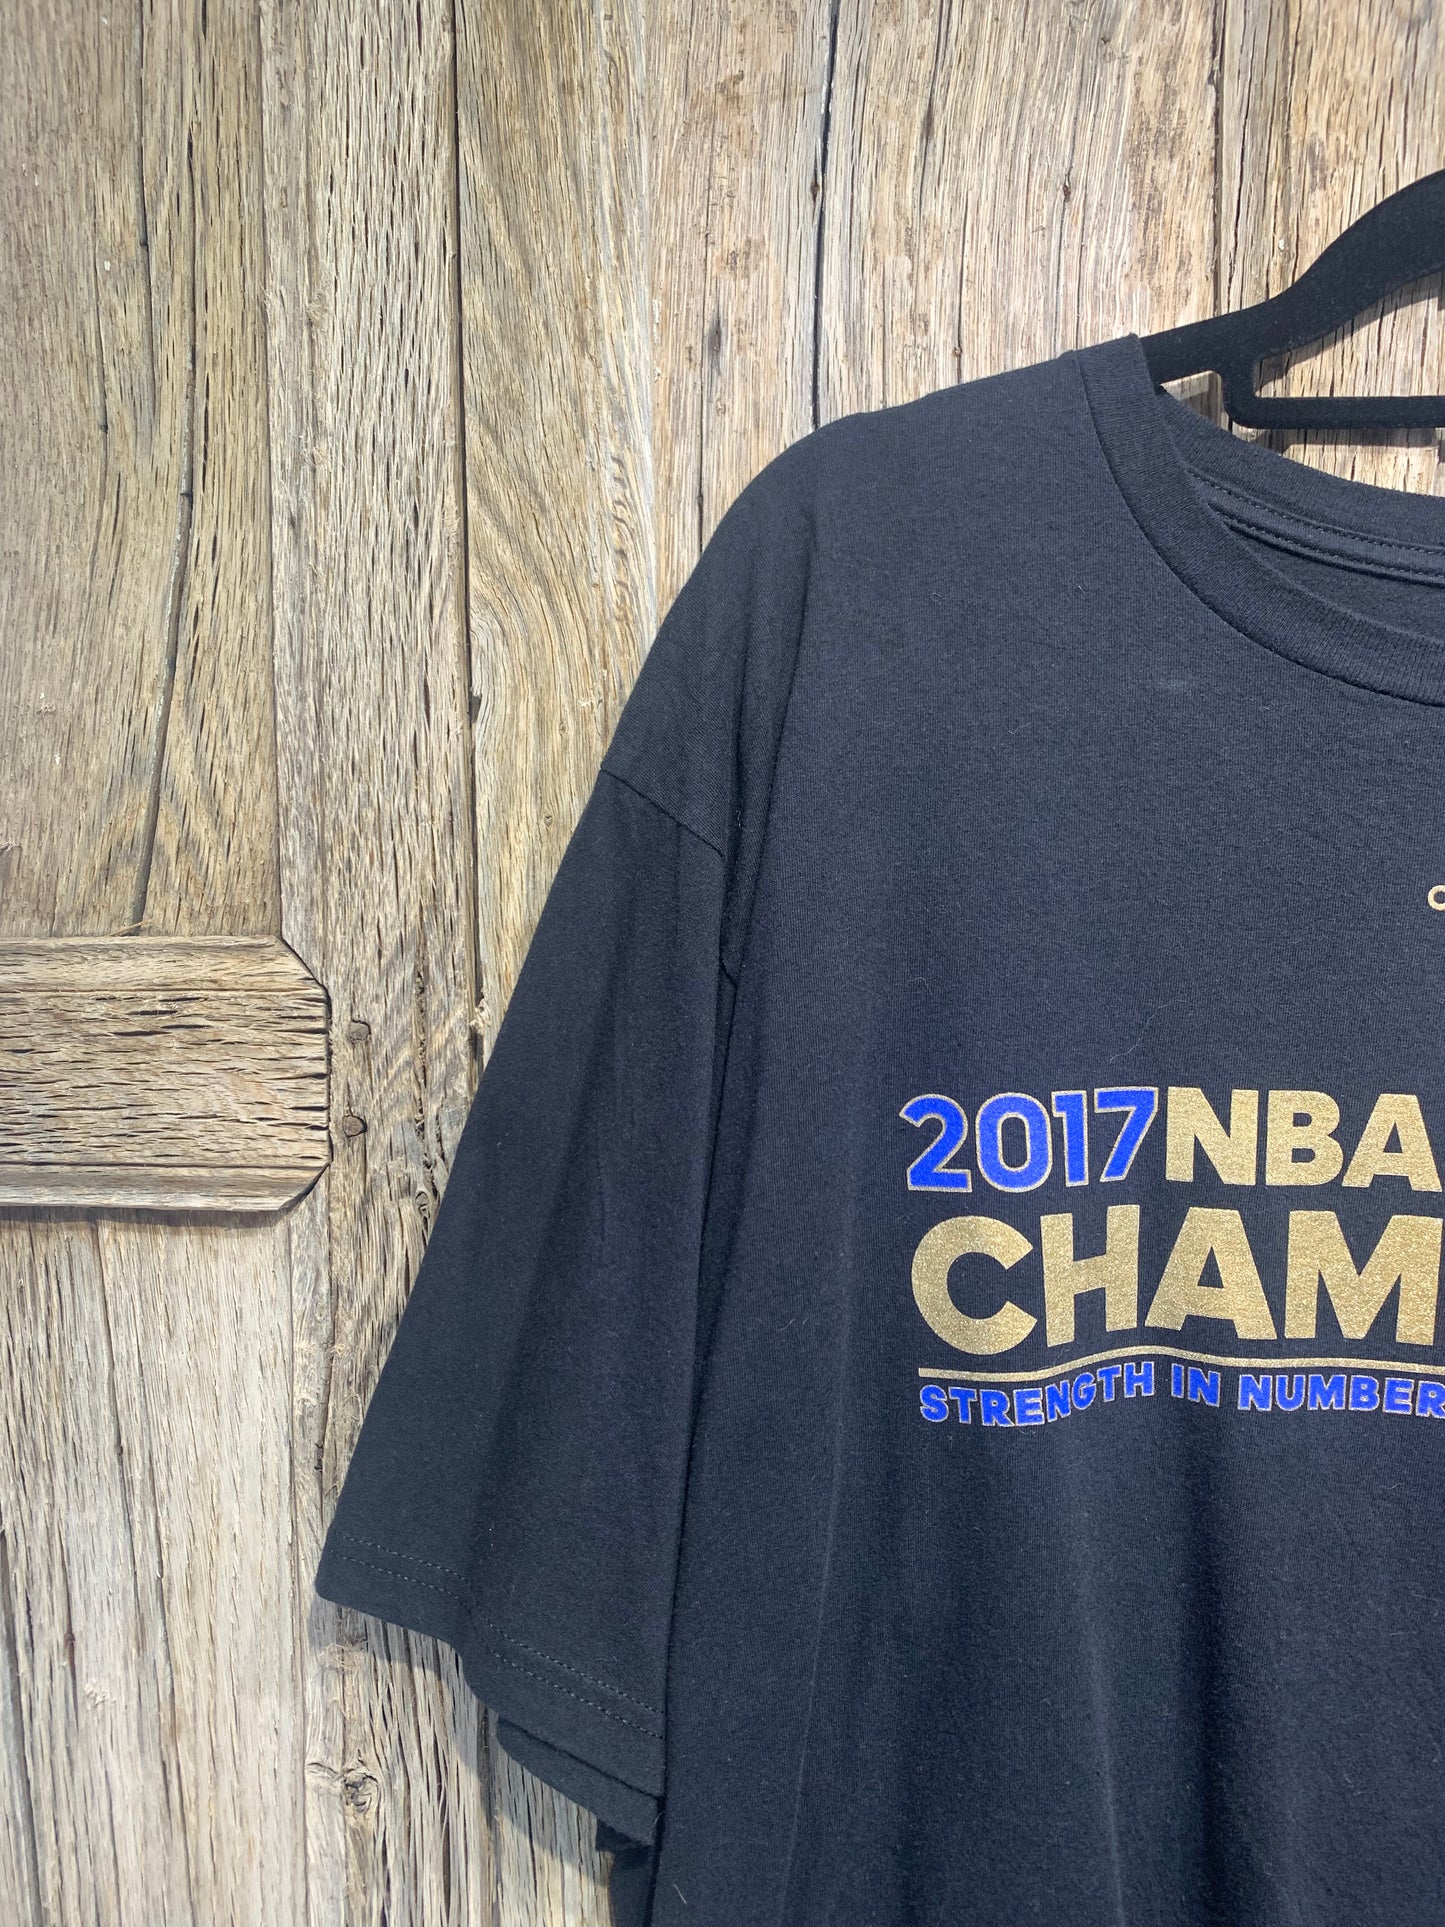 Adidas 2017 NBA Champions Graphic Tee